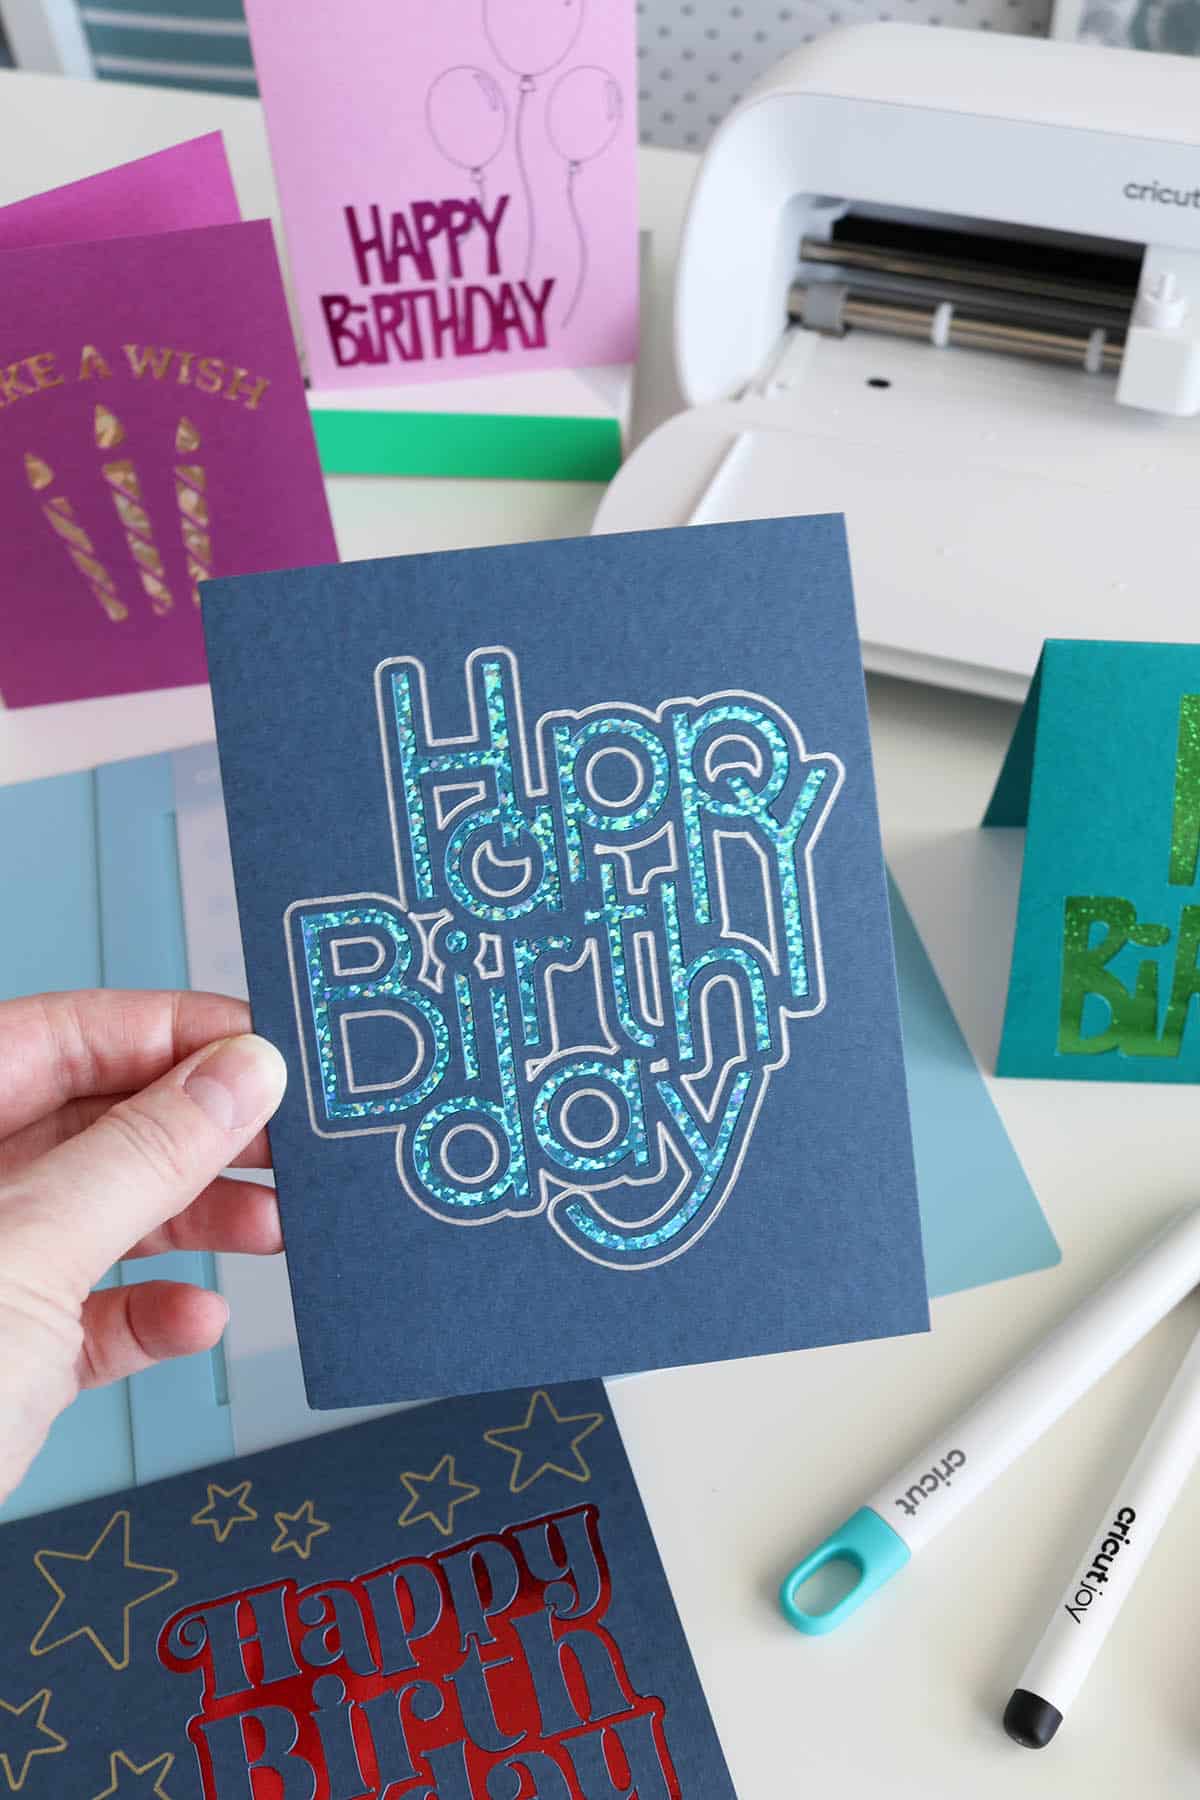 Cricut happy birthday cards made with card mat on Cricut Joy Xtra machine